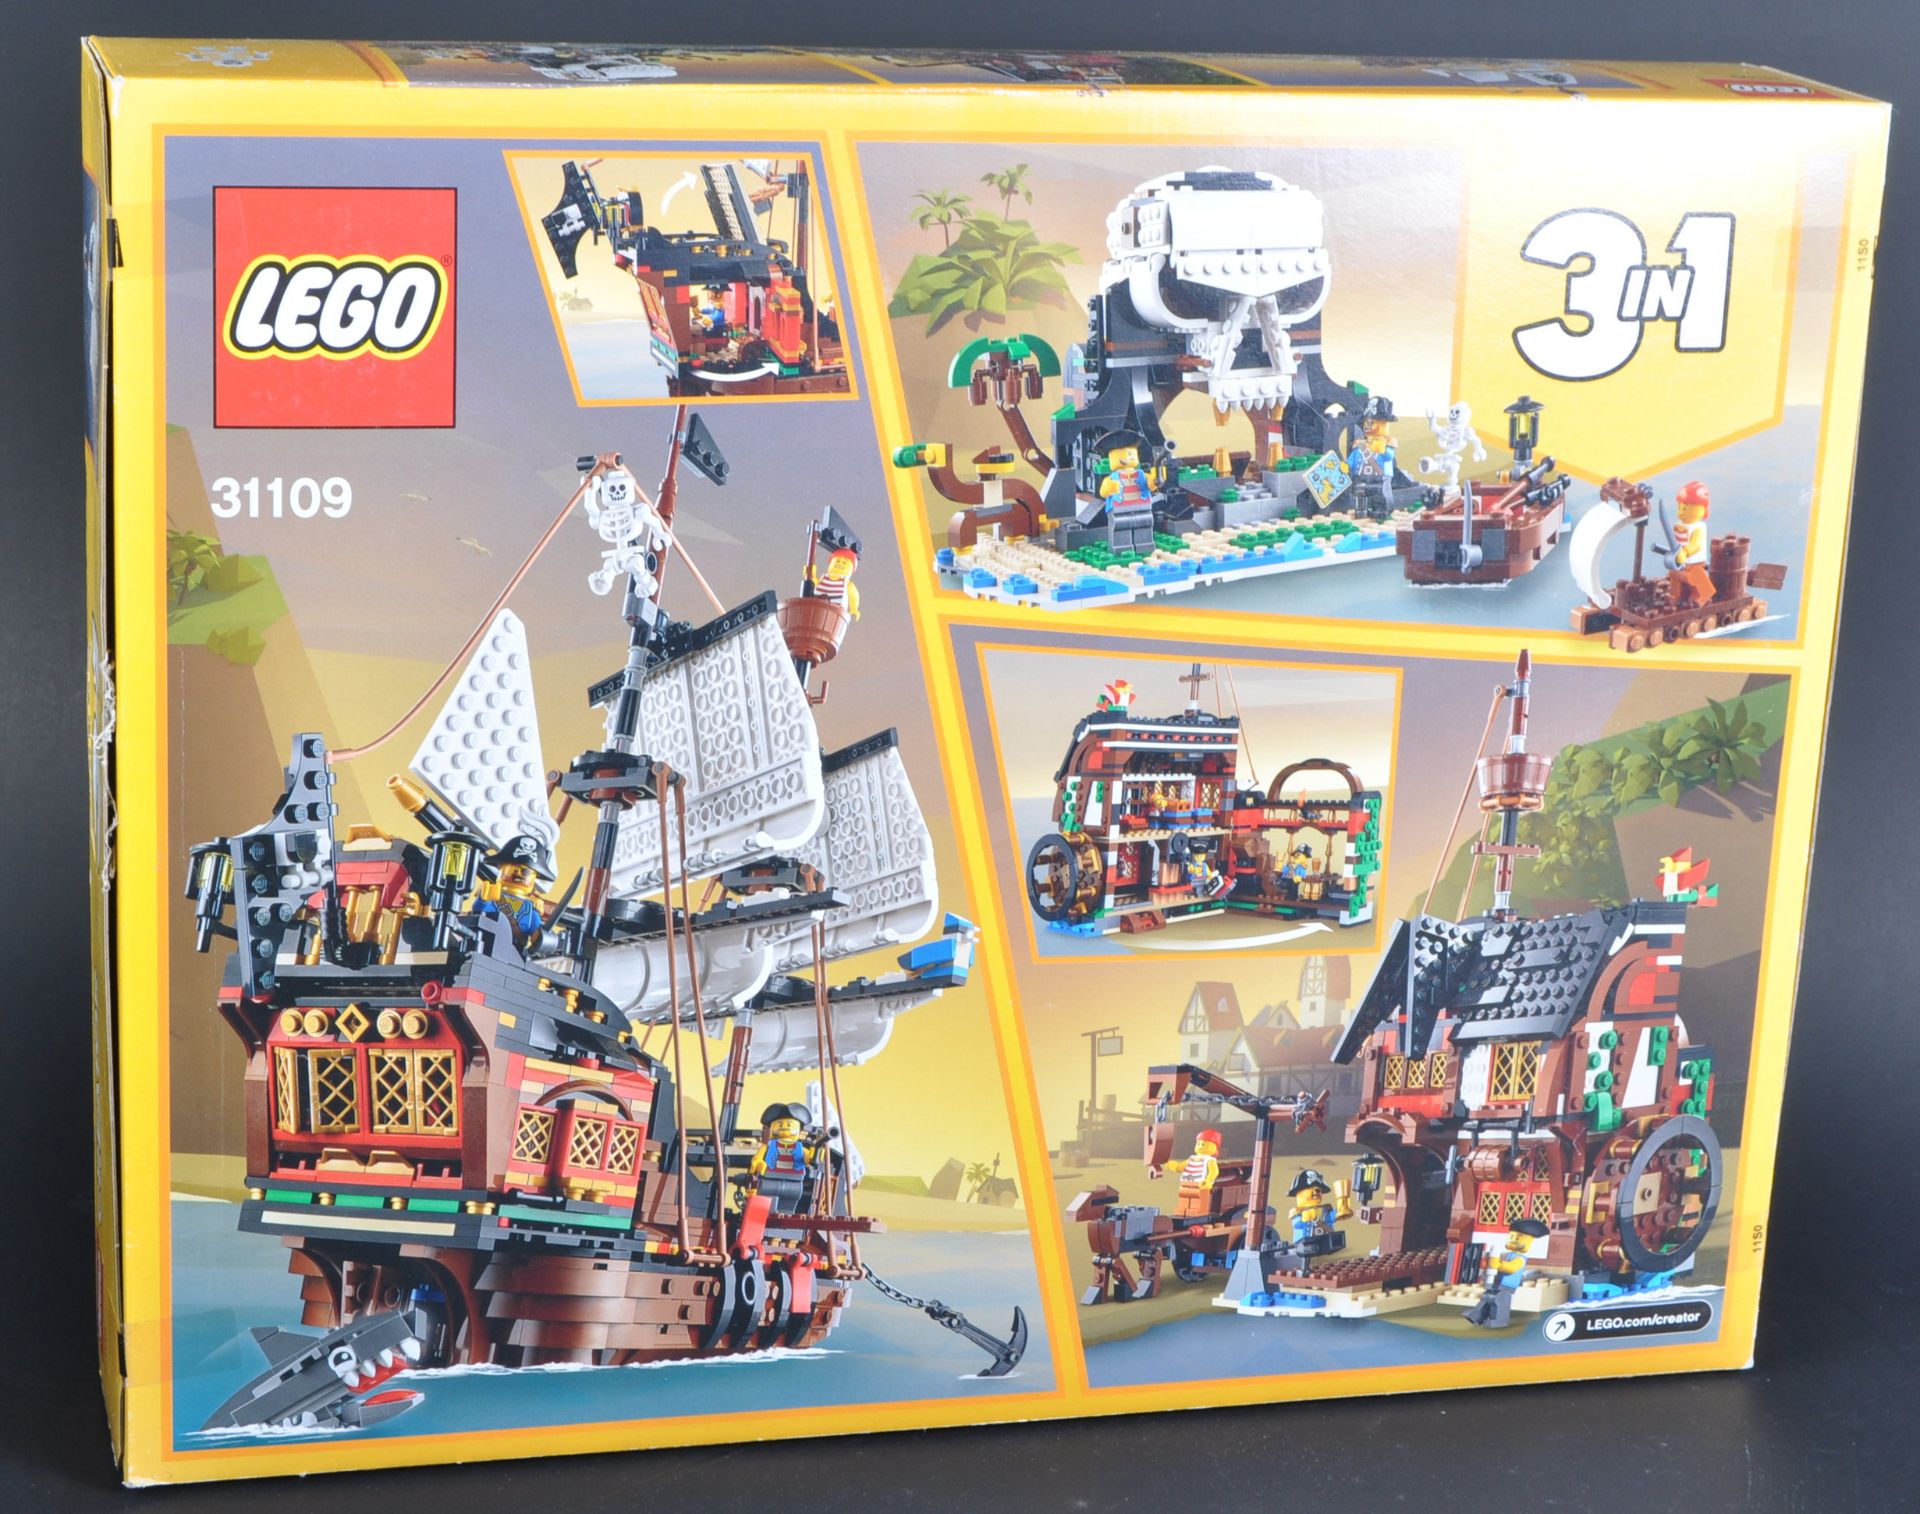 LEGO SET - CREATOR - 31109 - PIRATE SHIP - Image 2 of 3